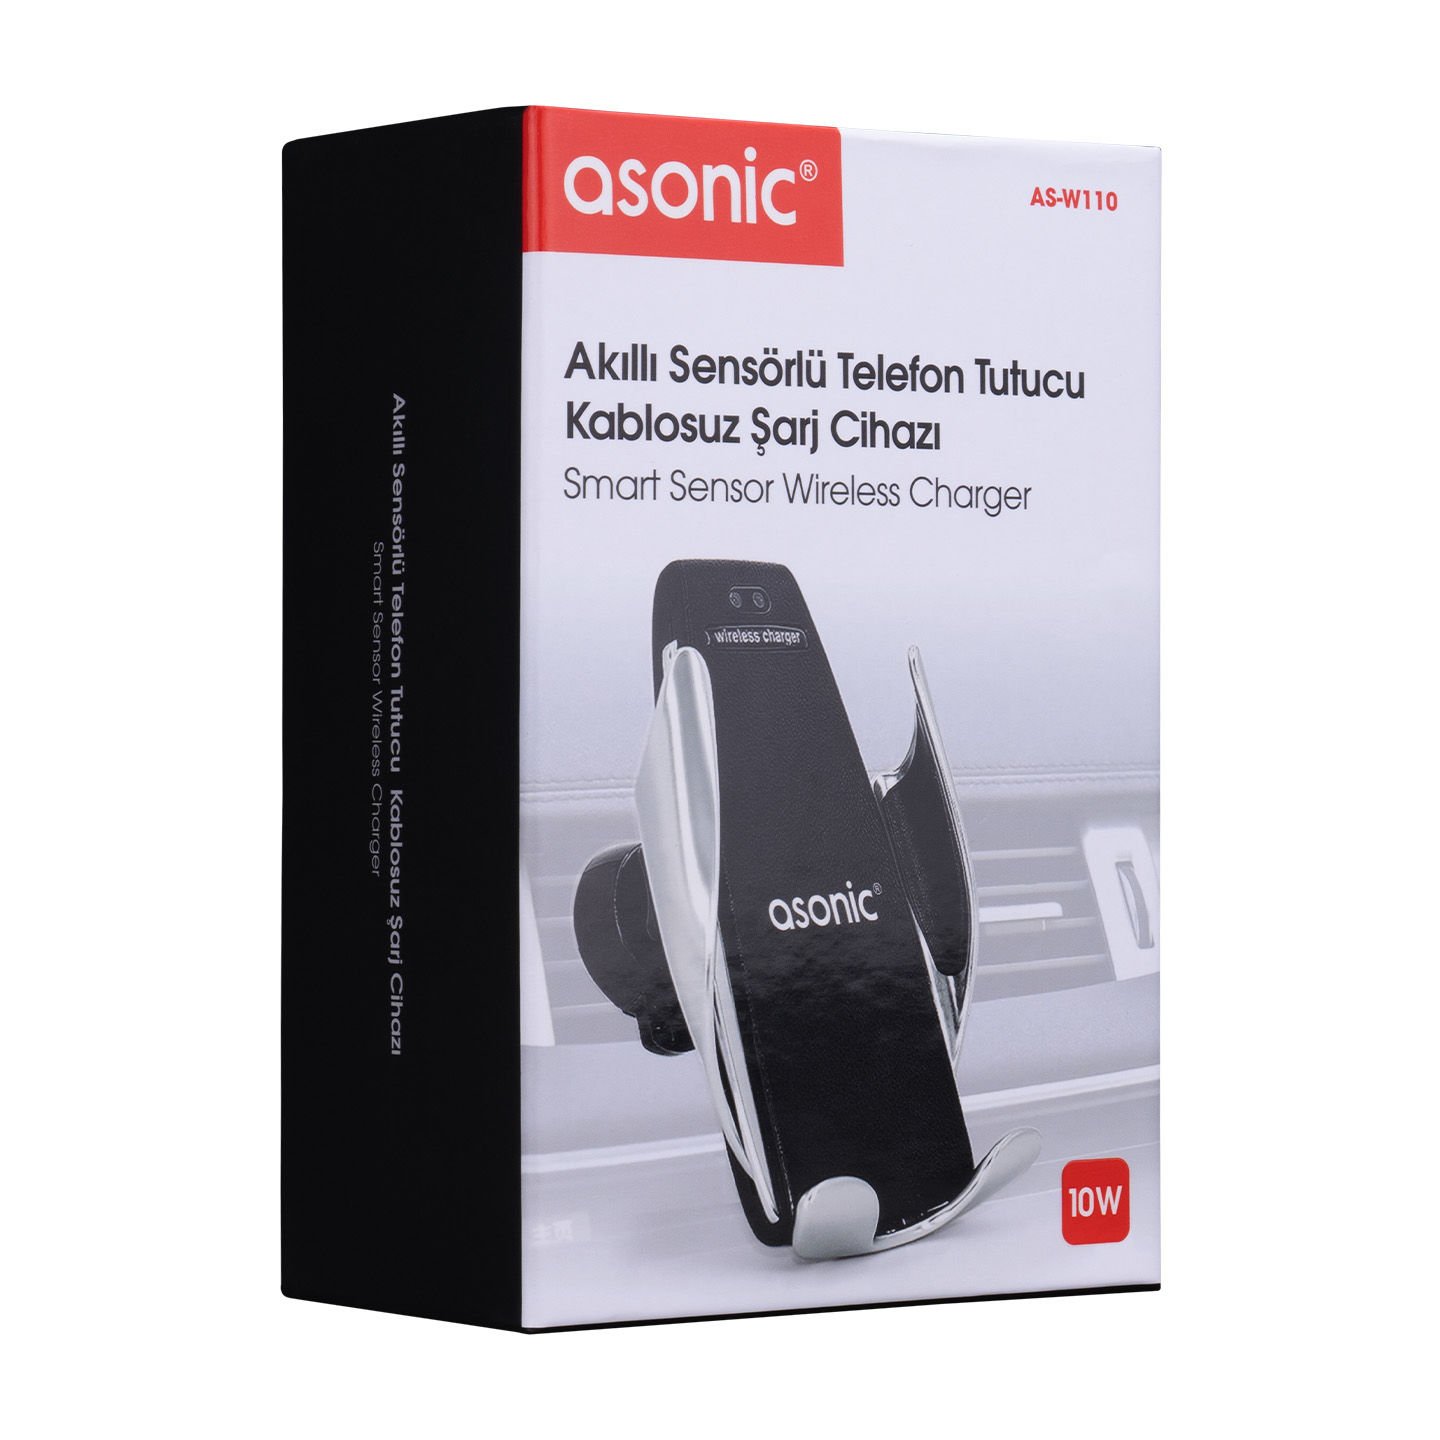 Asonic AS-W110 10W Sensörlü Telefon Tutucu Kablosuz Şarj Cihazı